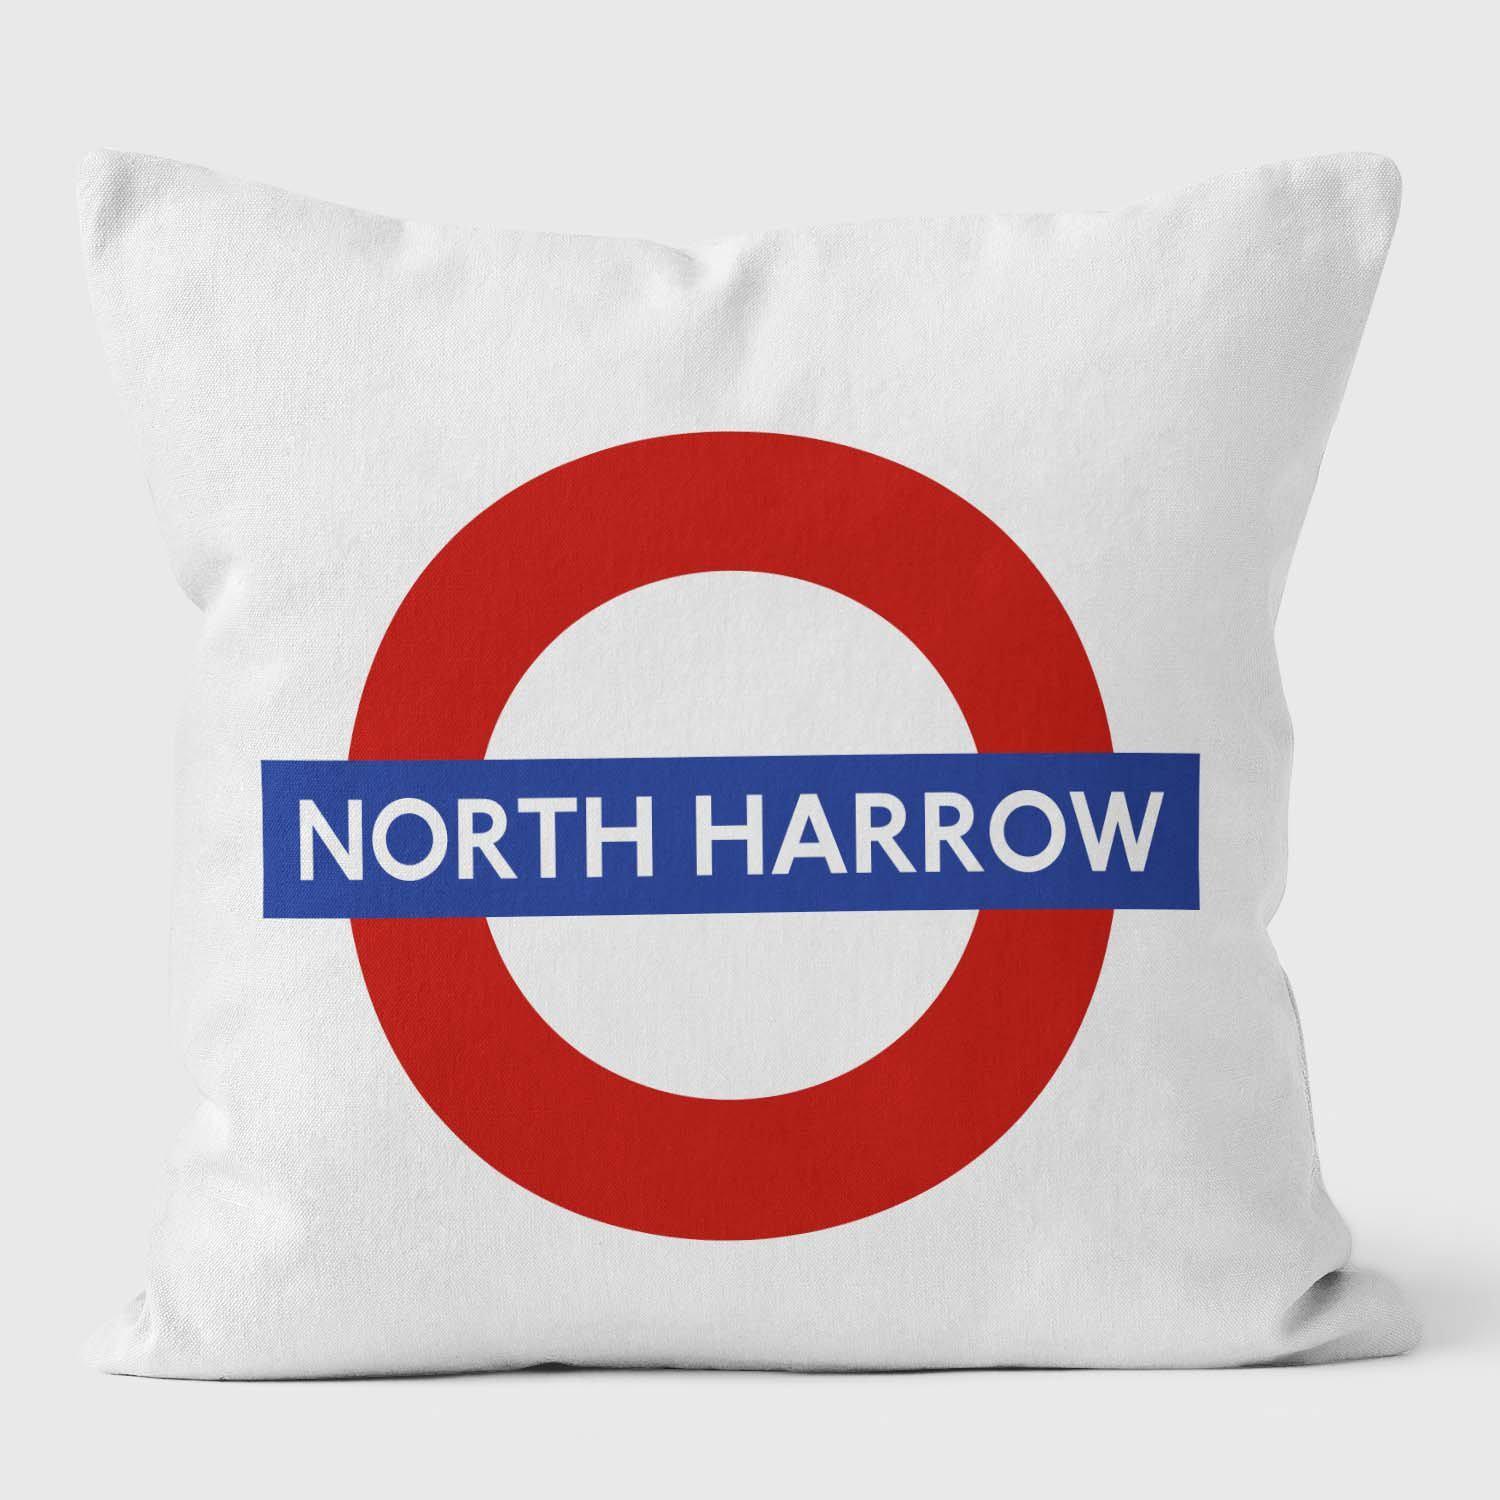 North Harrow London Underground Tube Station Roundel Cushion - Handmade Cushions UK - WeLoveCushions